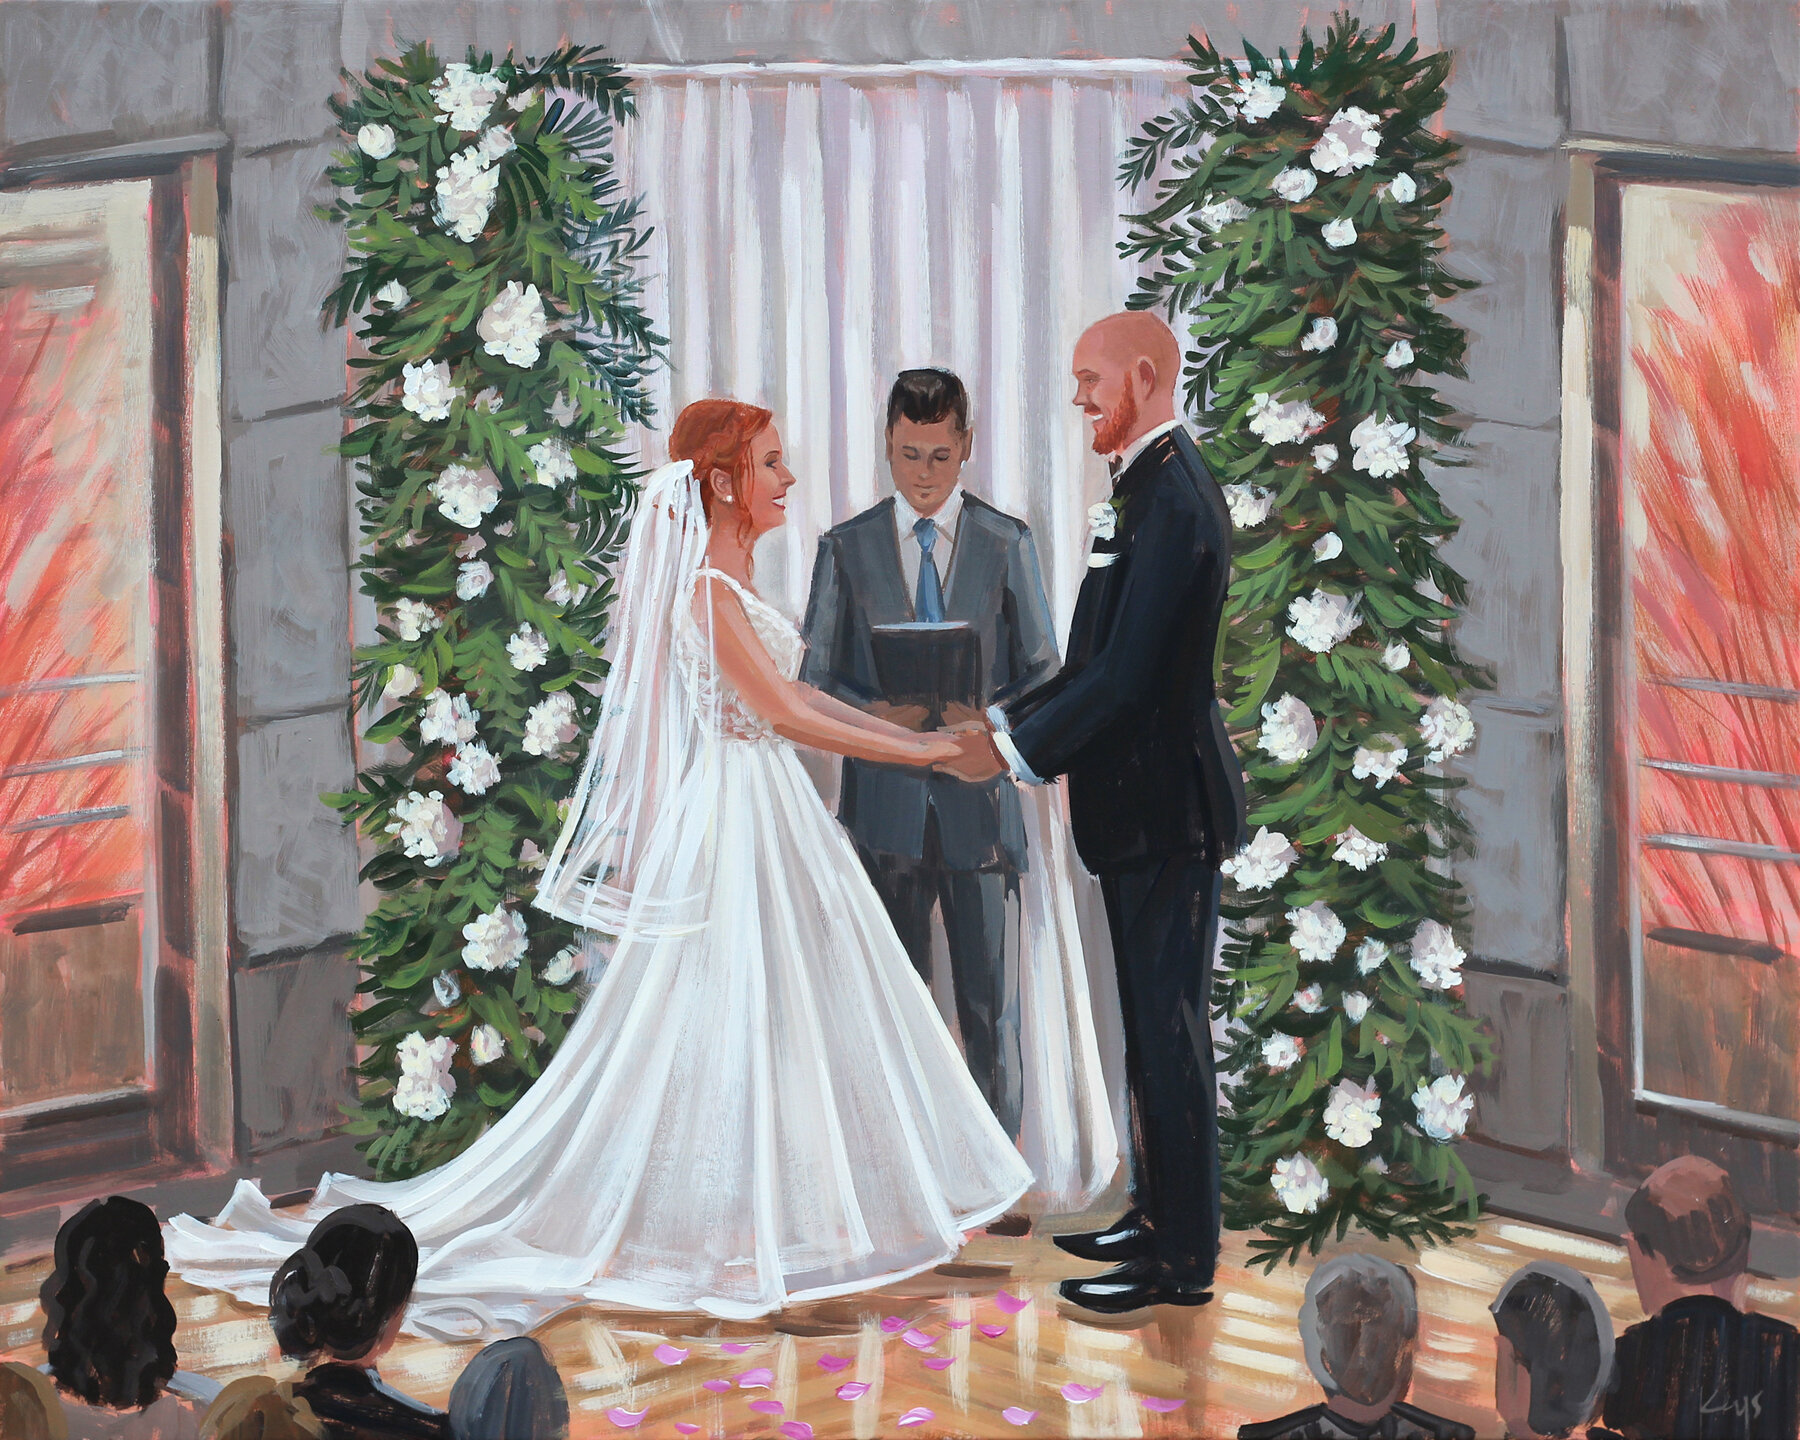 Live wedding painter, Ben Keys, captured Carleigh and Thomas’ ceremony held at the Ronald Reagan International Trade Center in Washington, DC.